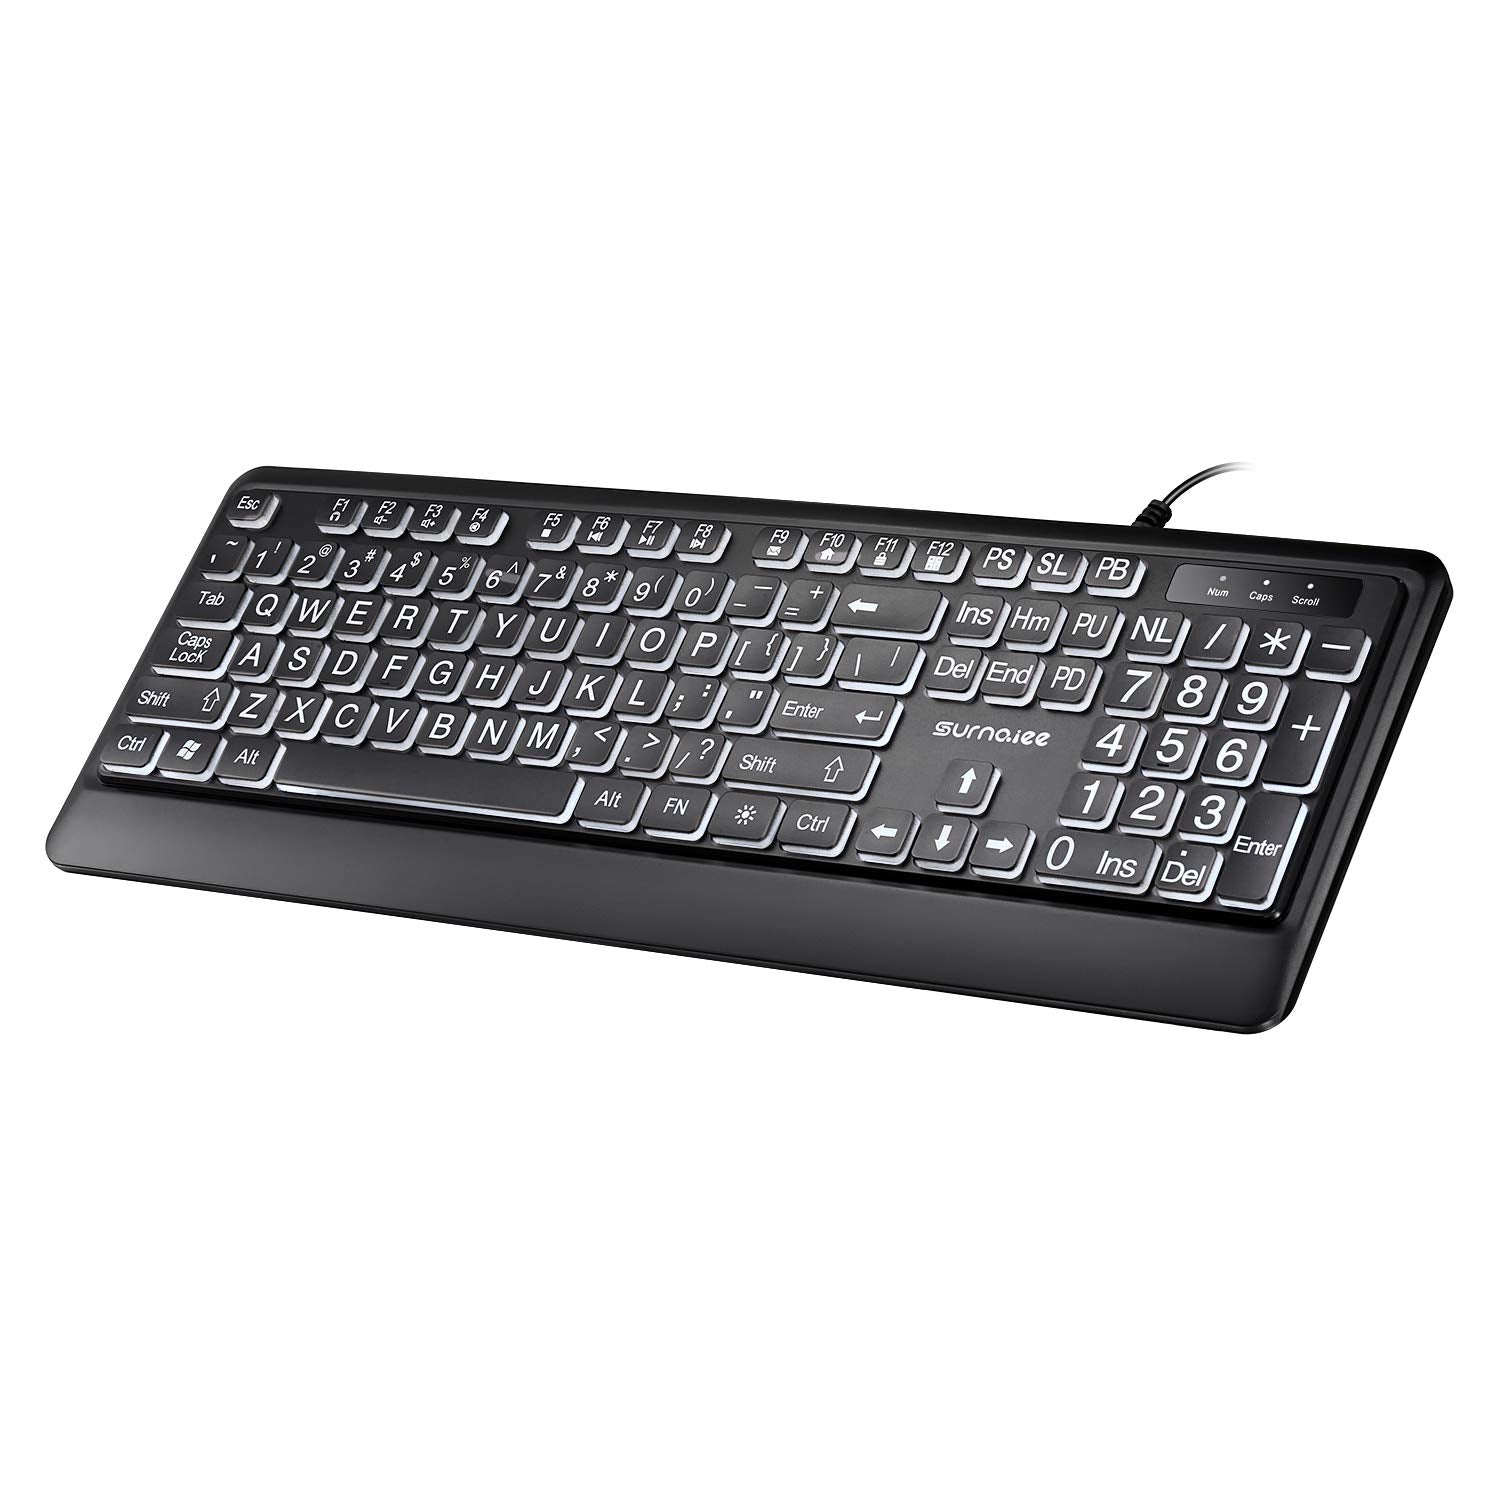 SurnQiee Large Letter Print Keyboard, 104 Keys Standard Full Size USB Wired White LED Backlit Computer Keyboard (KB612)